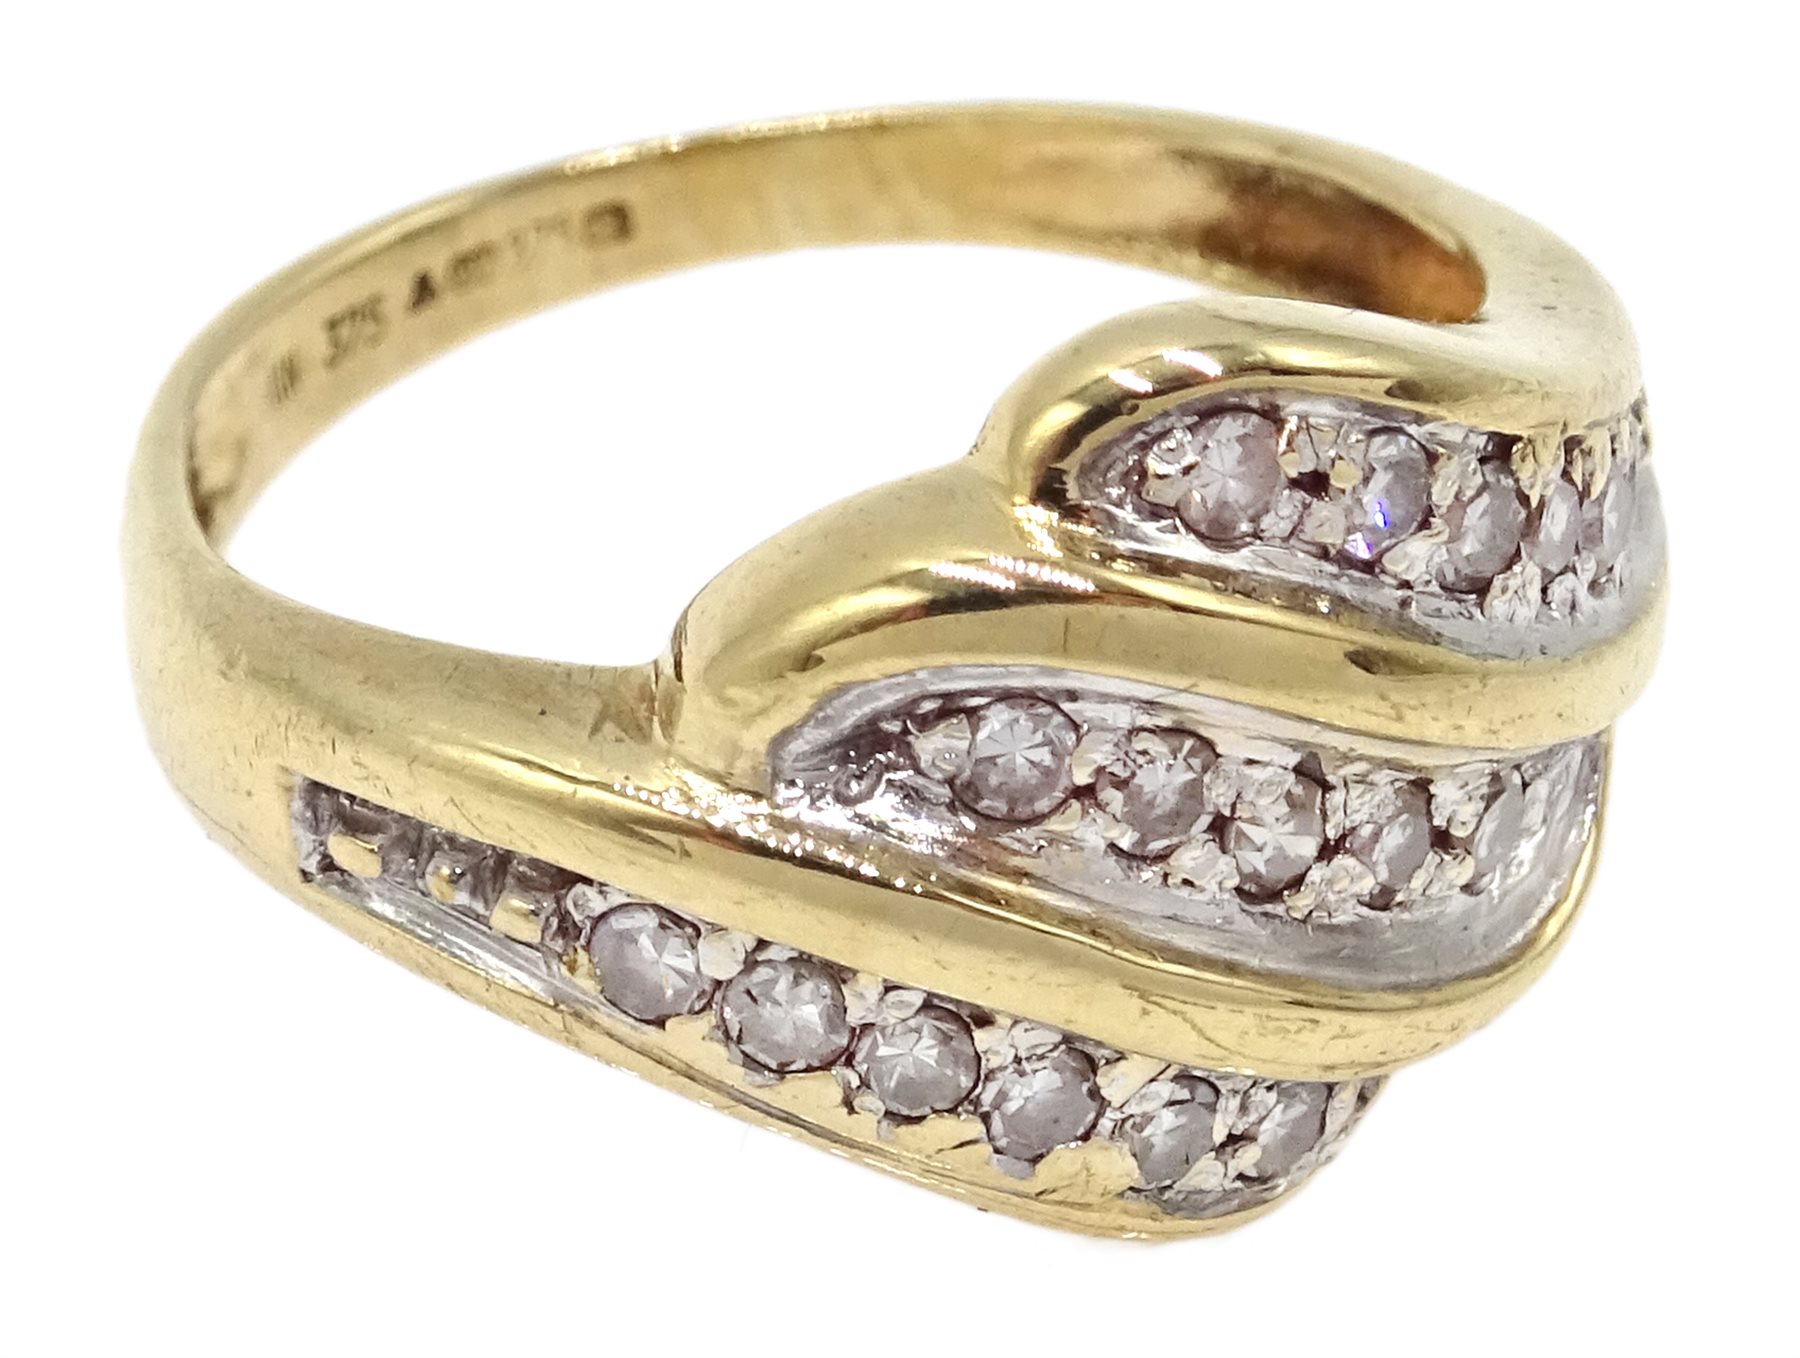 9ct gold diamond set ring, hallmarked - Jewellery, Watches & Silver